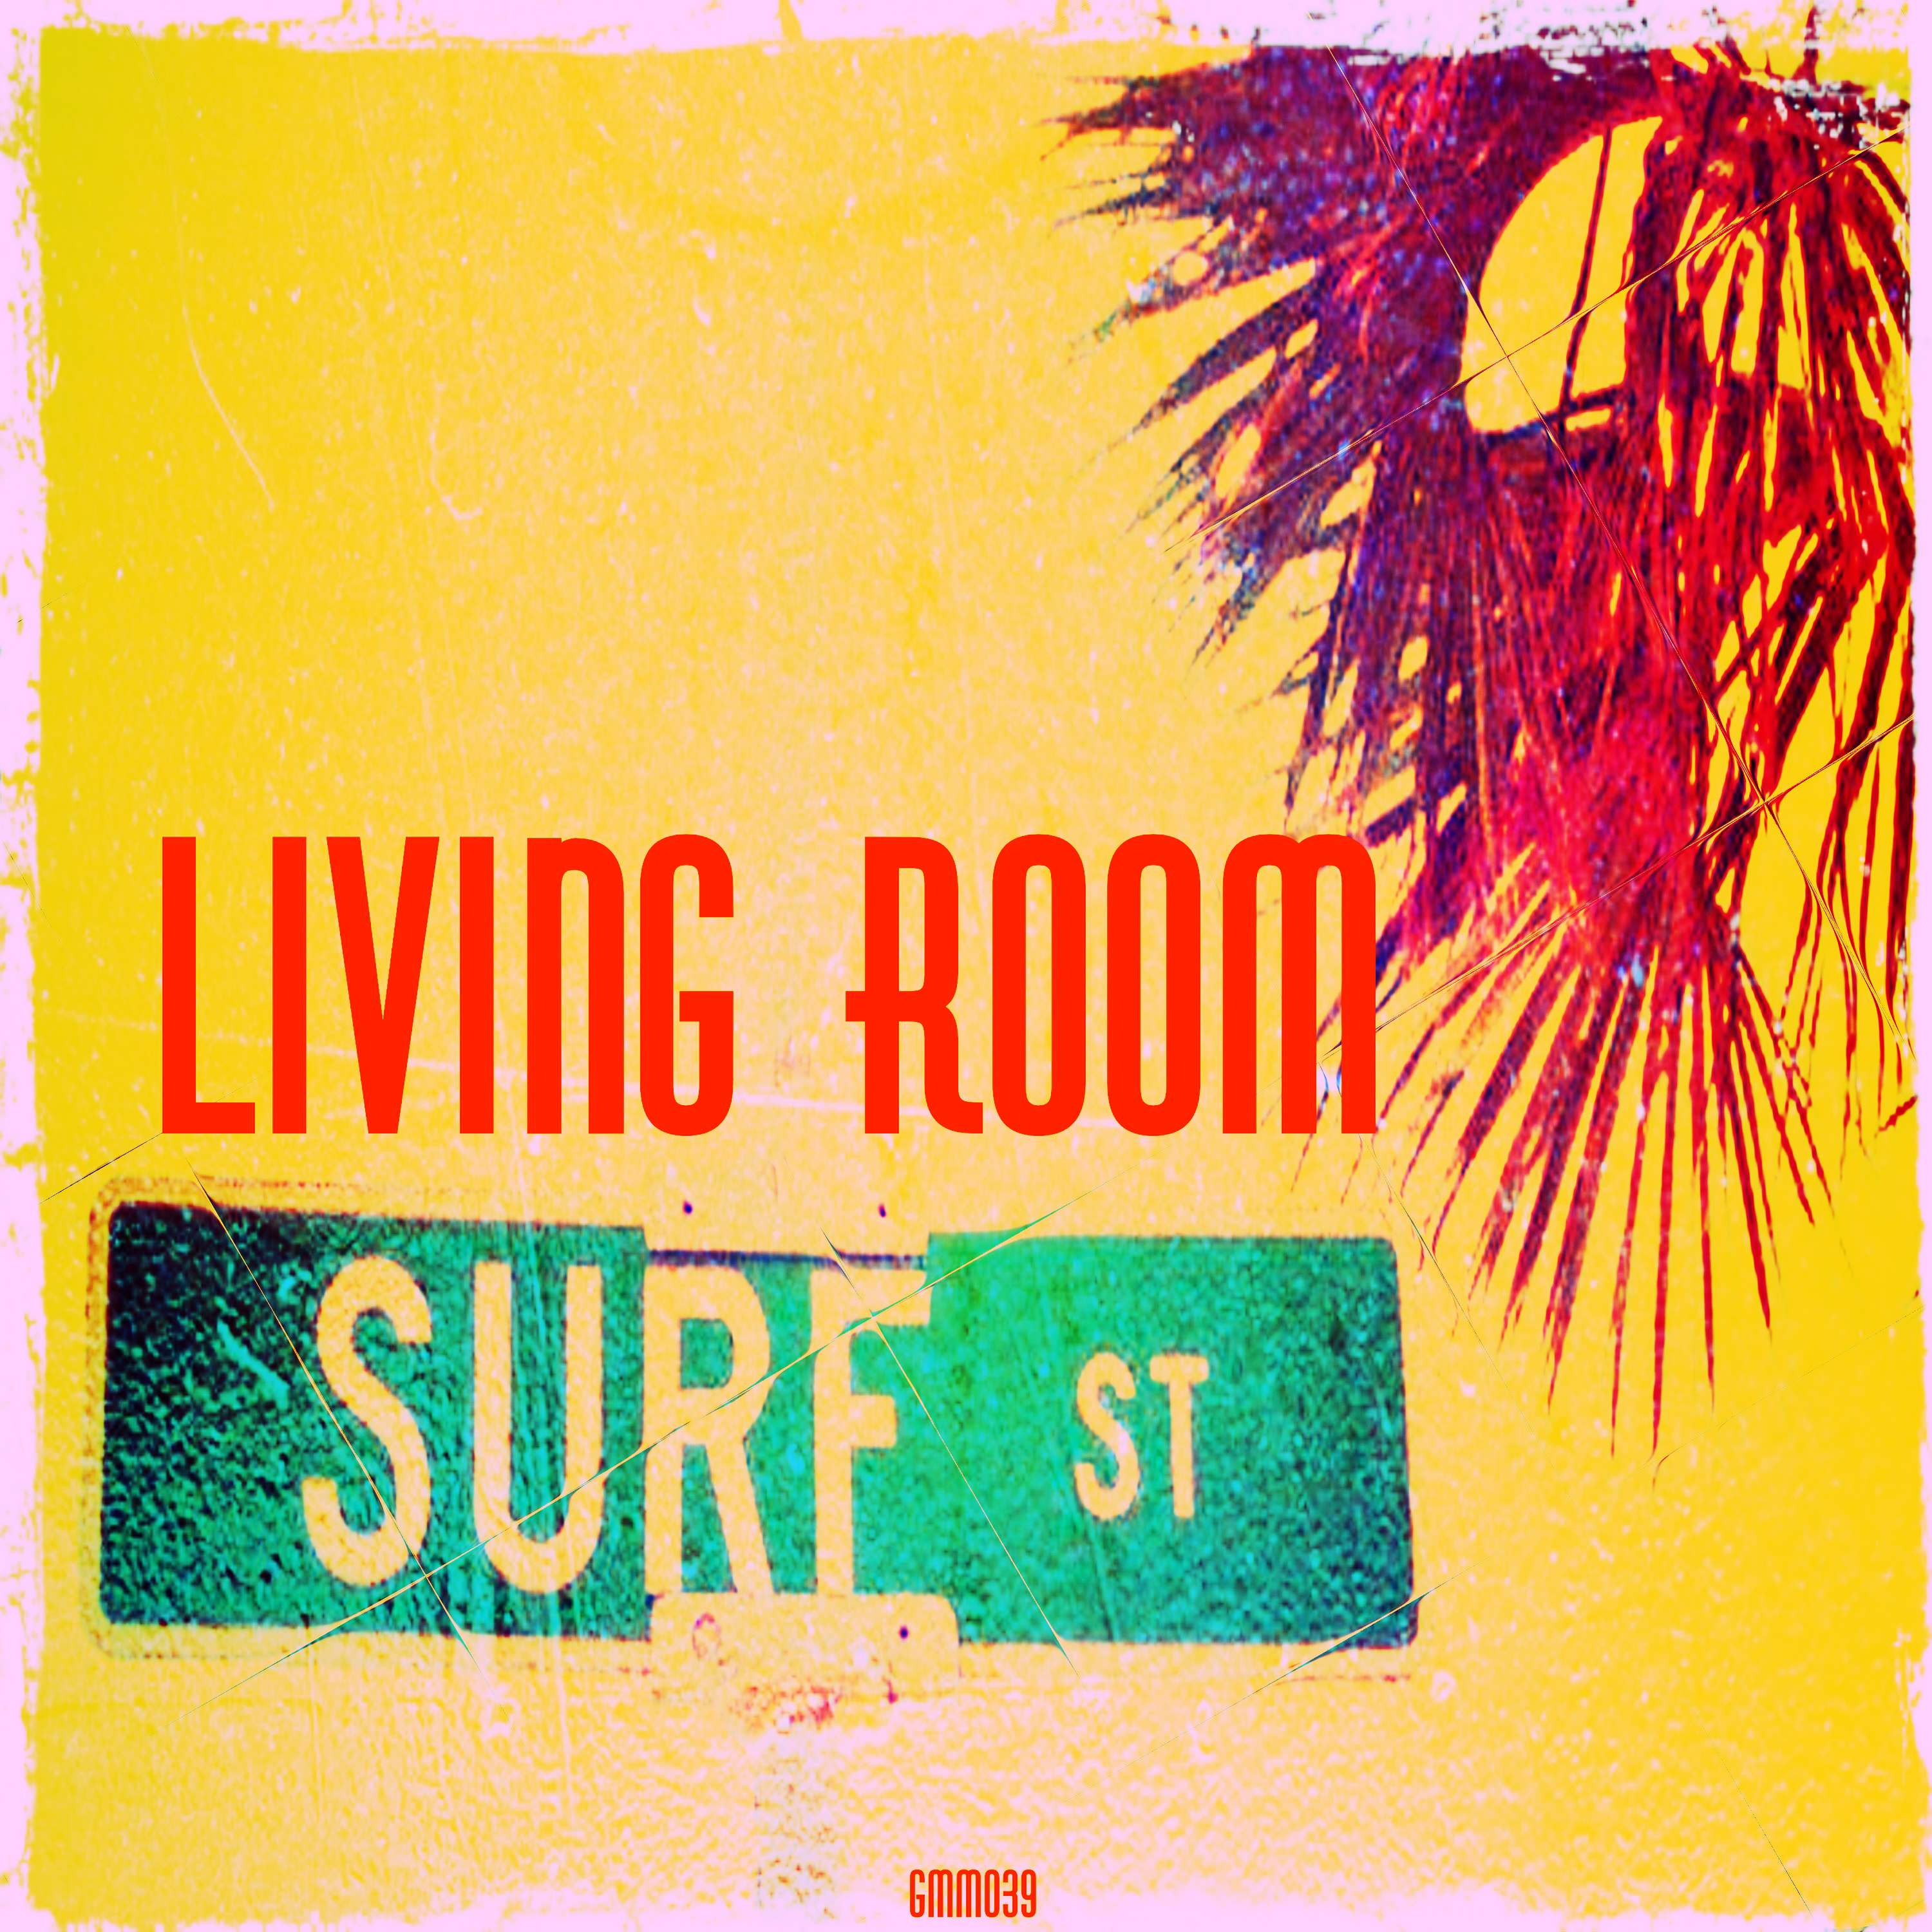 Surf St.